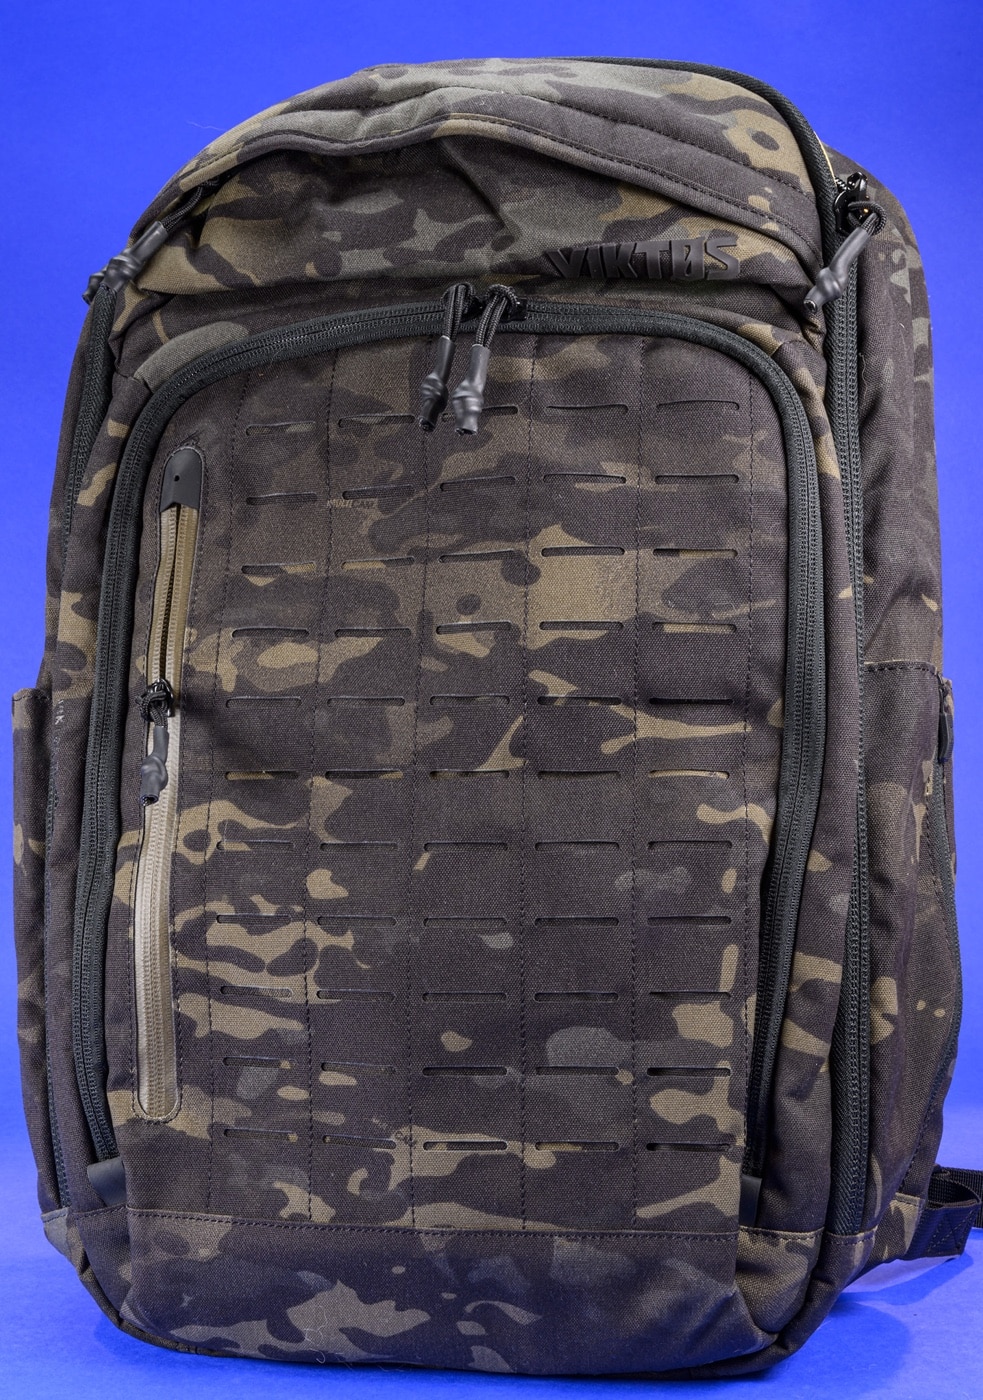 viktos dark camo on backpack